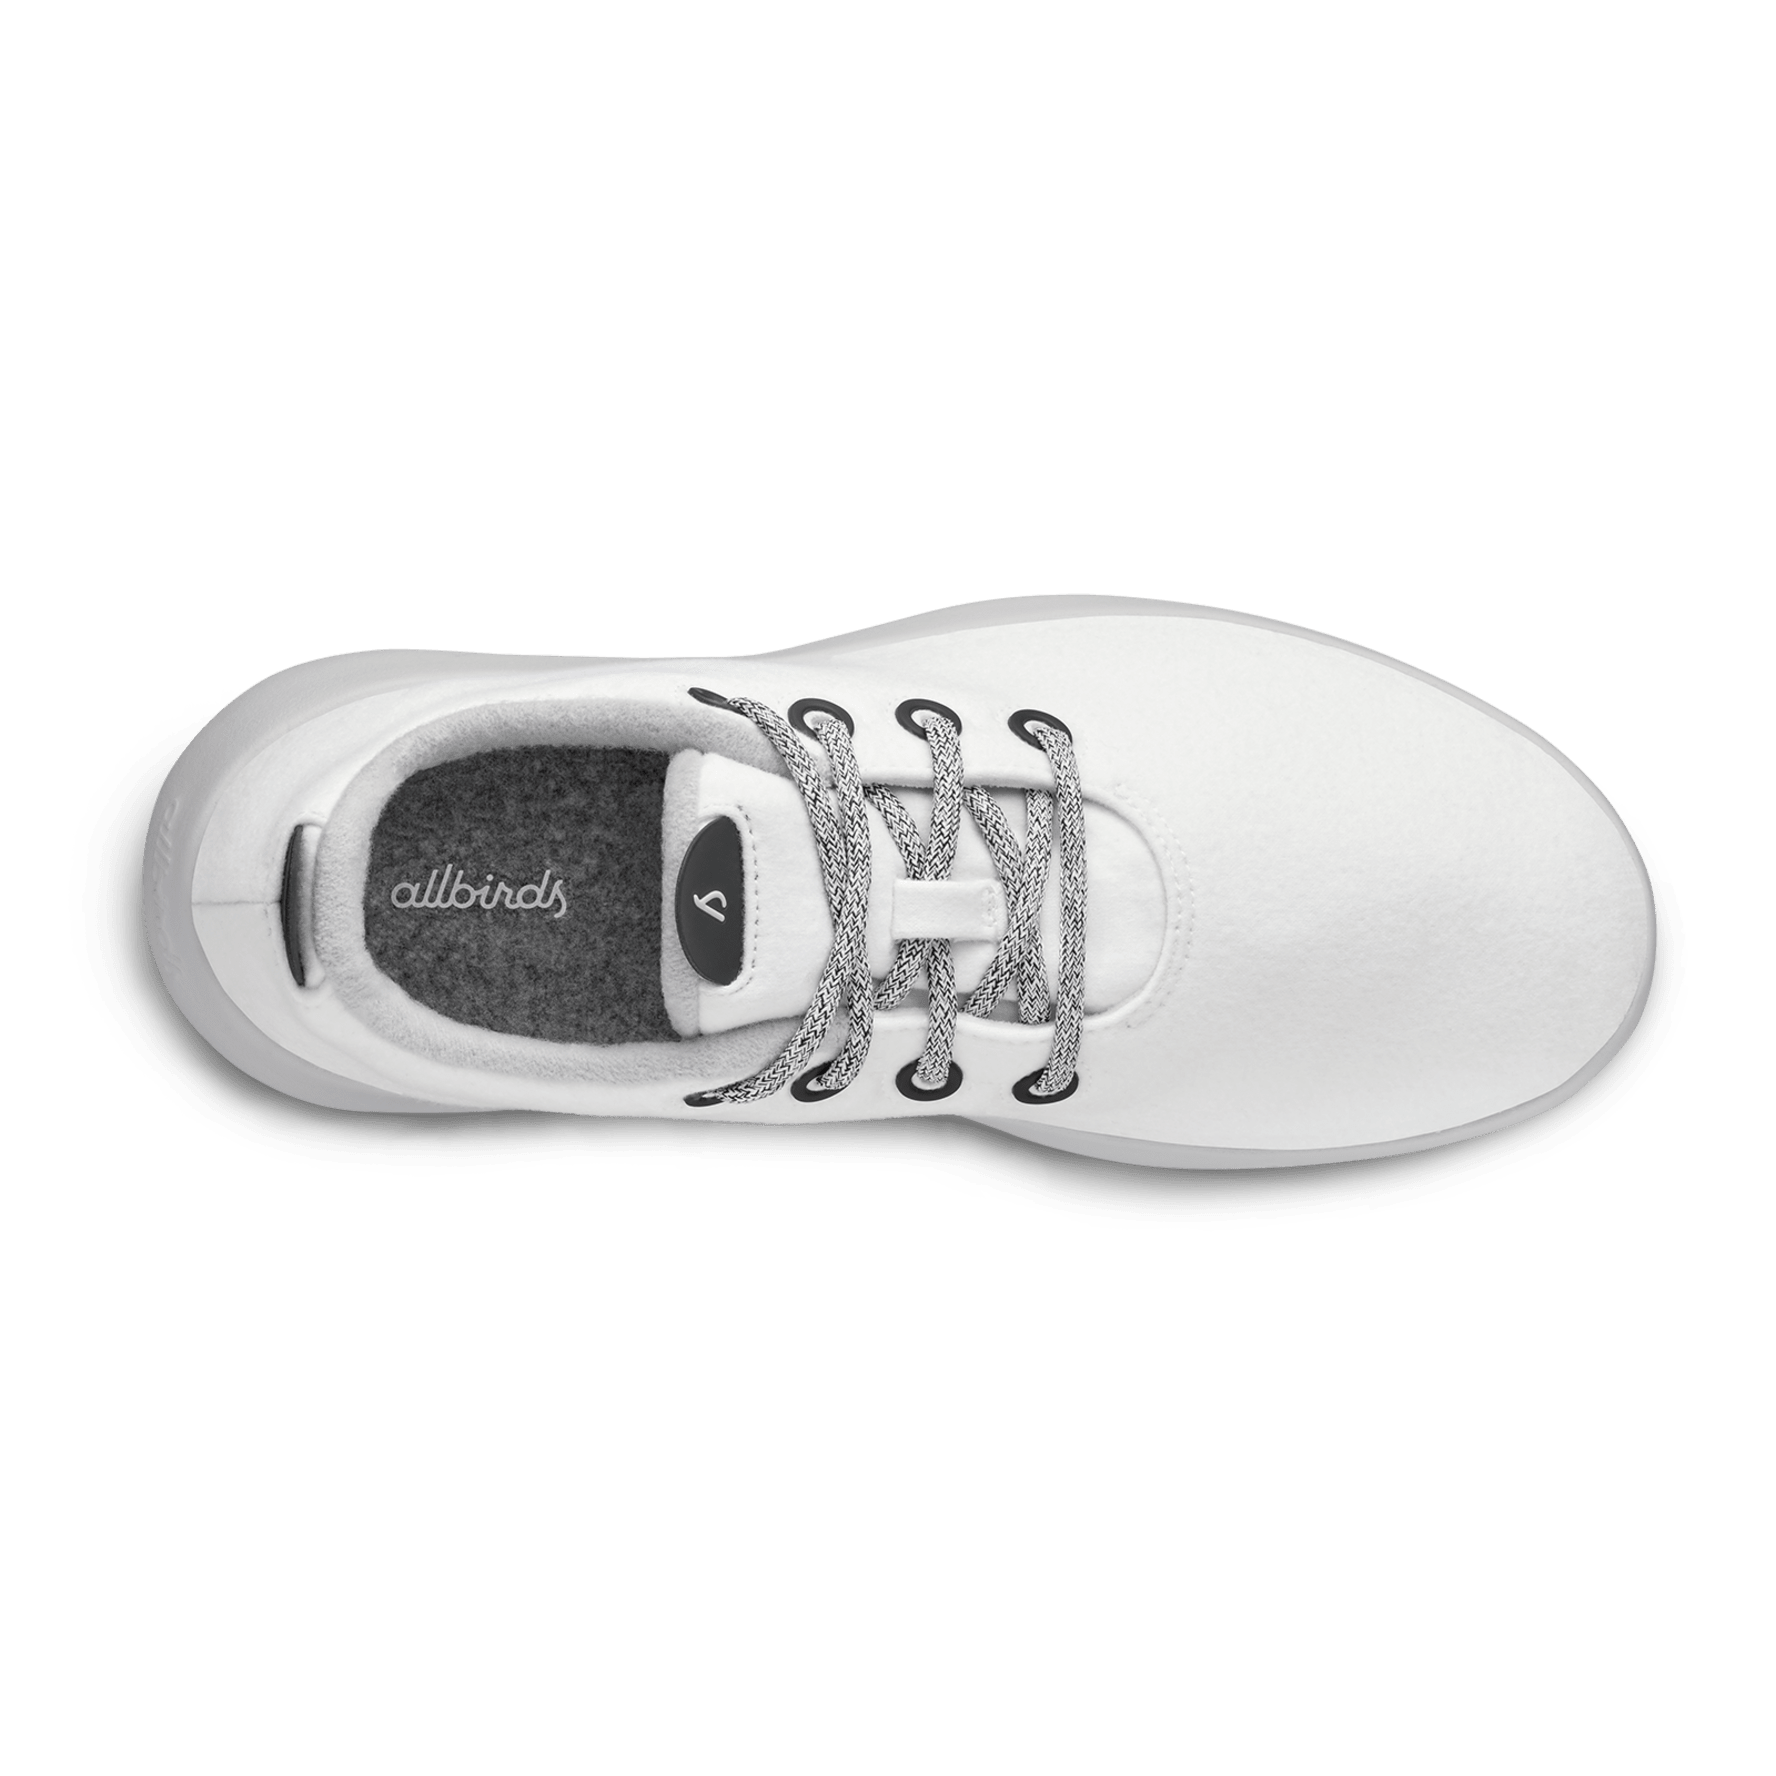 Allbirds Wool Runner Mizzles WRM Grey Shoes Women's Size 8 